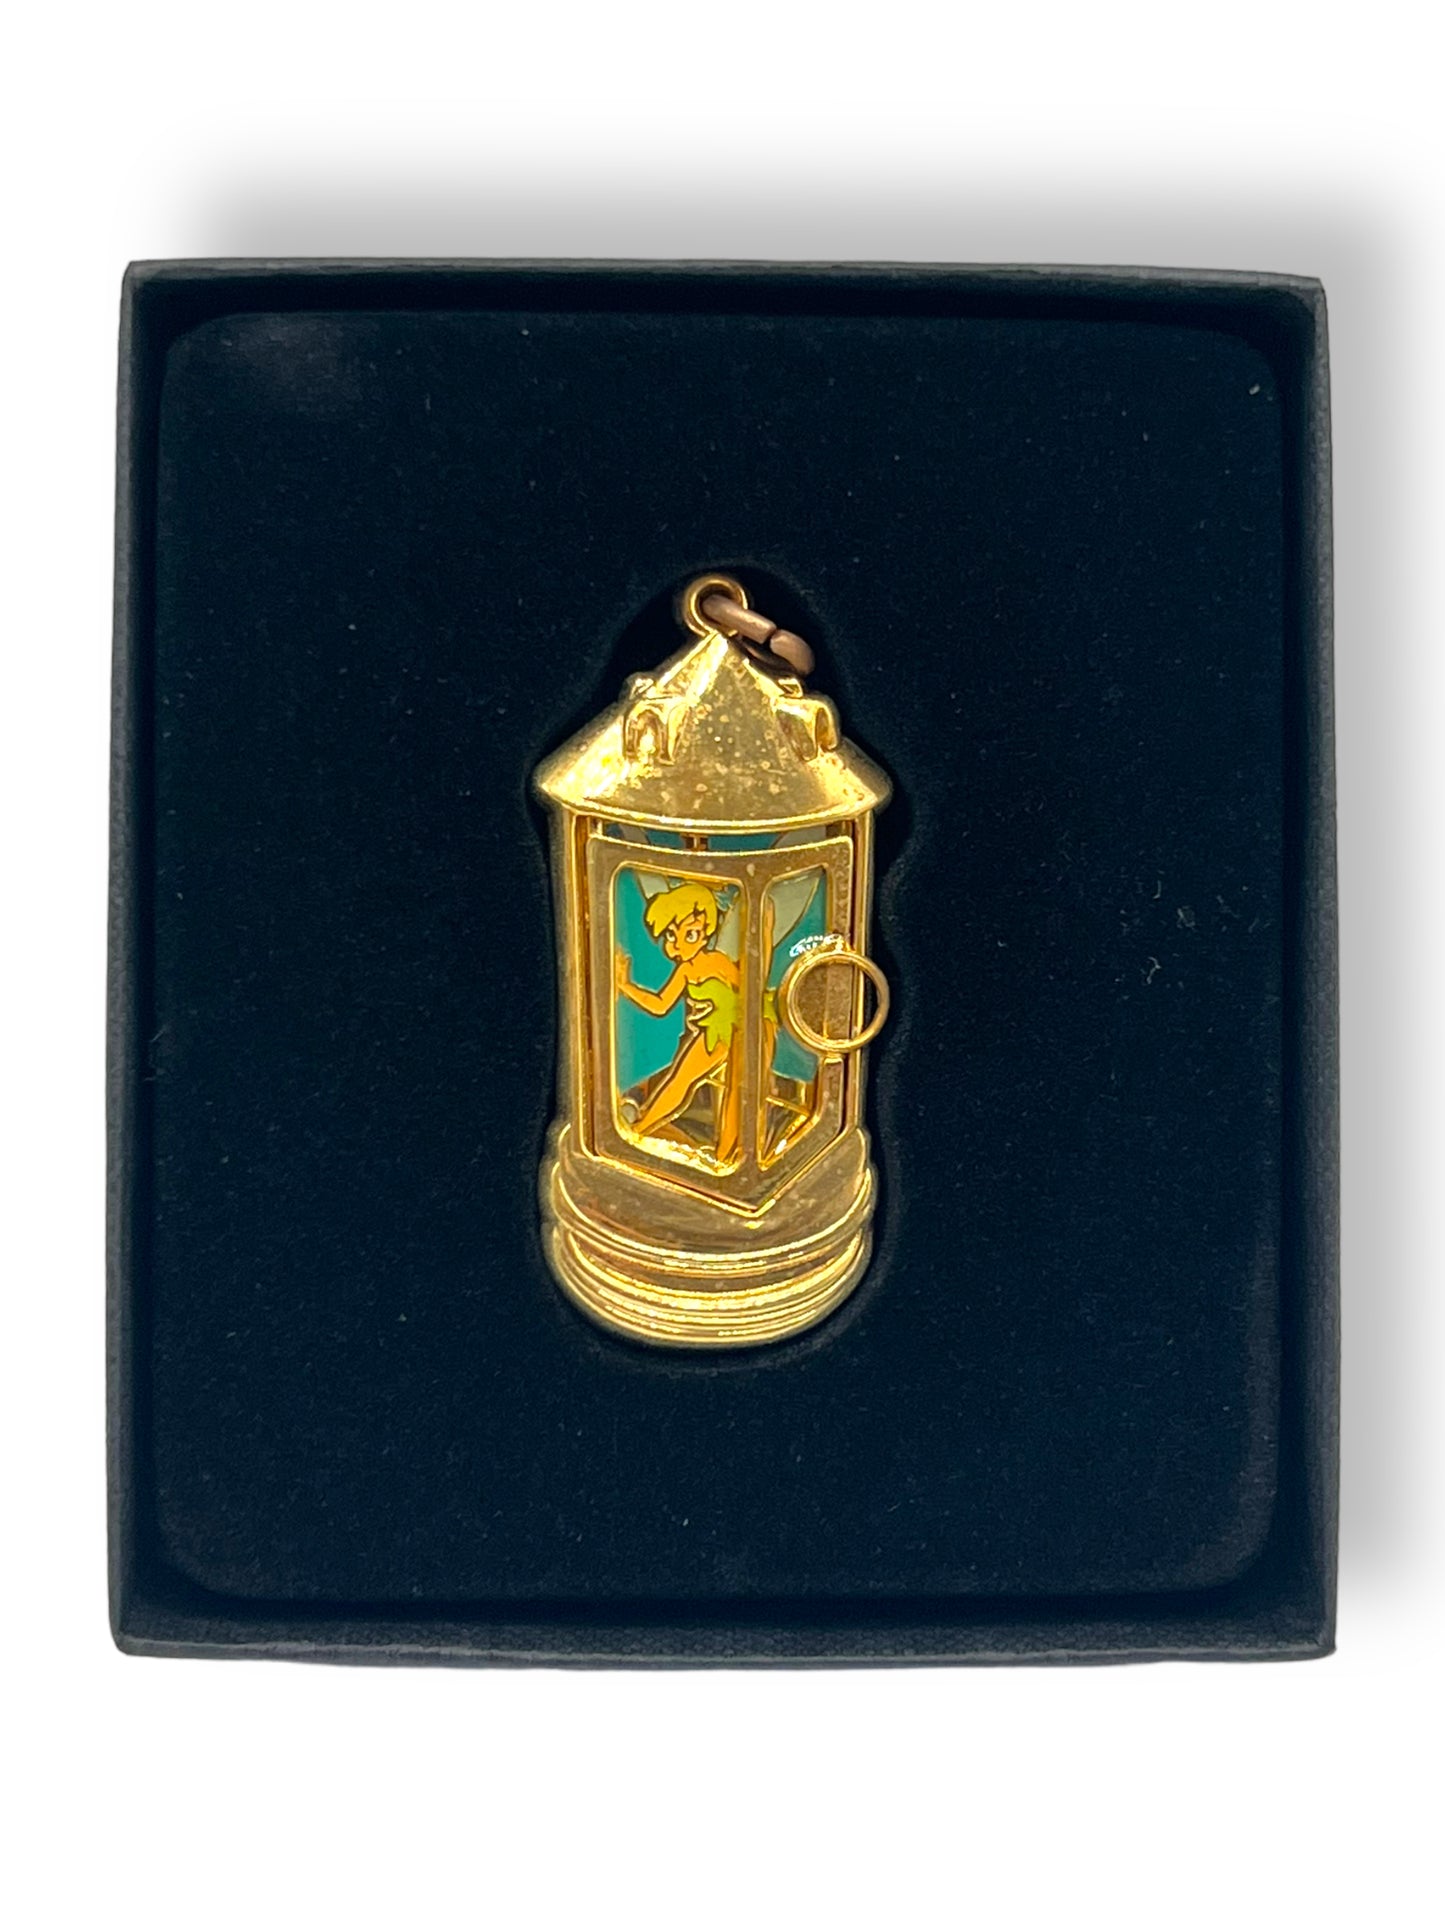 JDS Tinker Bell in Lantern Box Pin